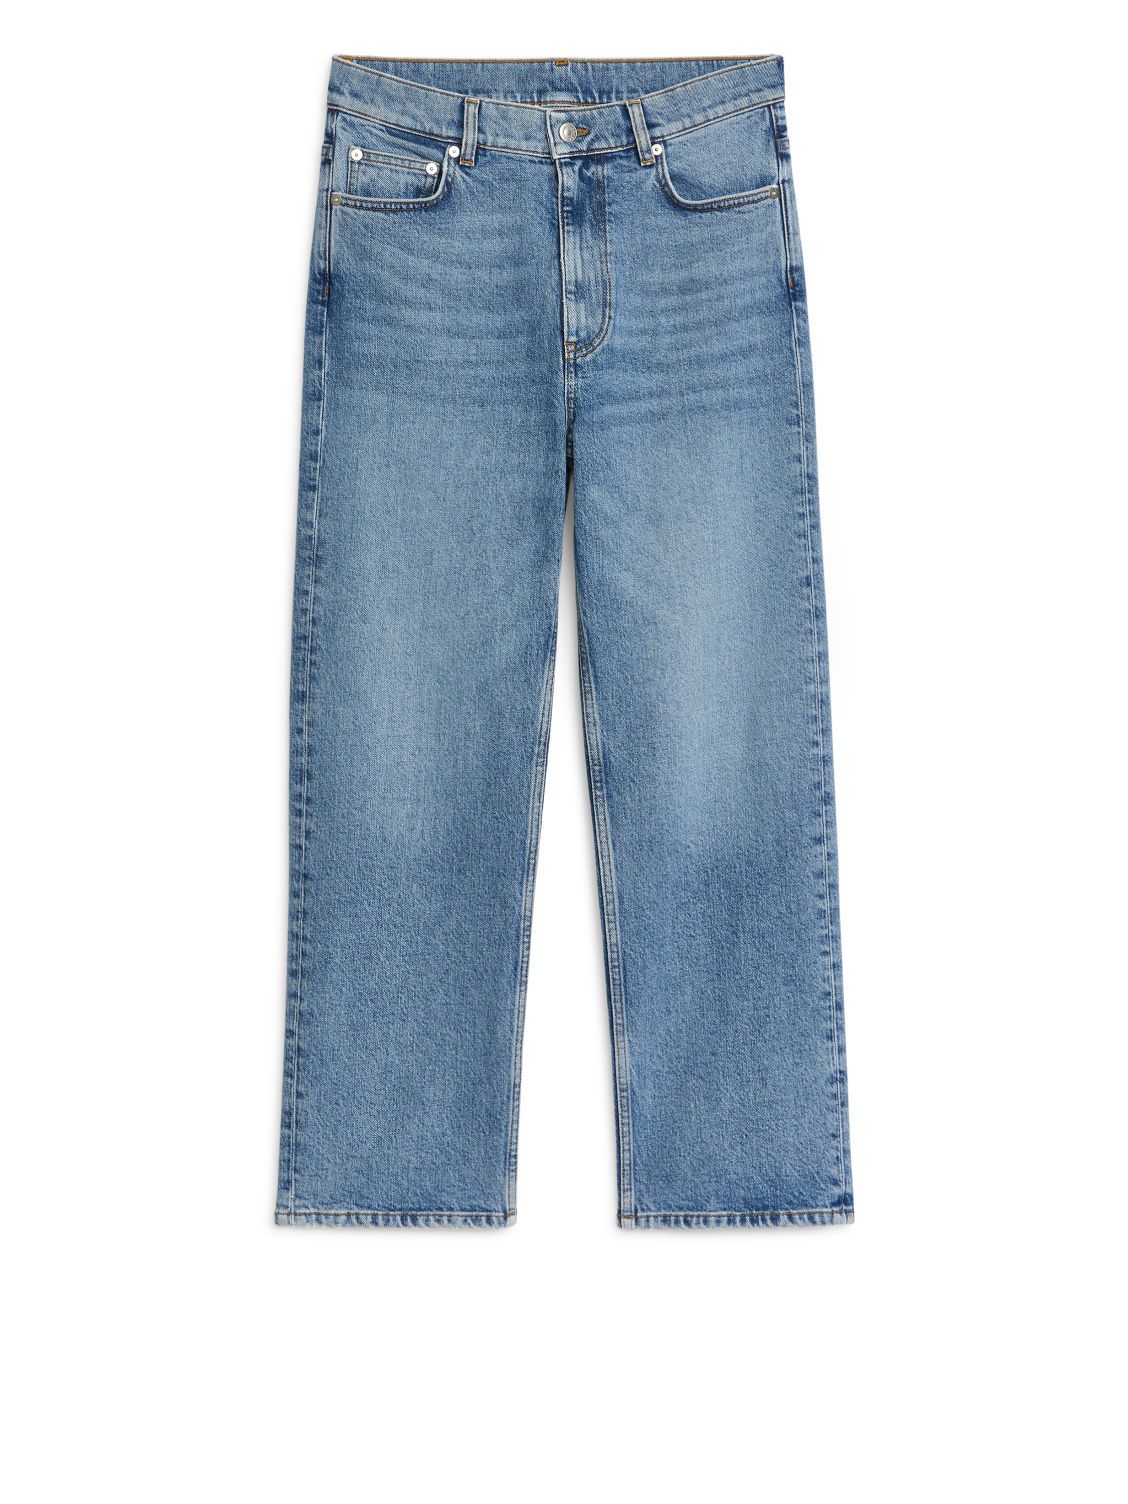 JADE CROPPED Slim Stretch Jeans | ARKET